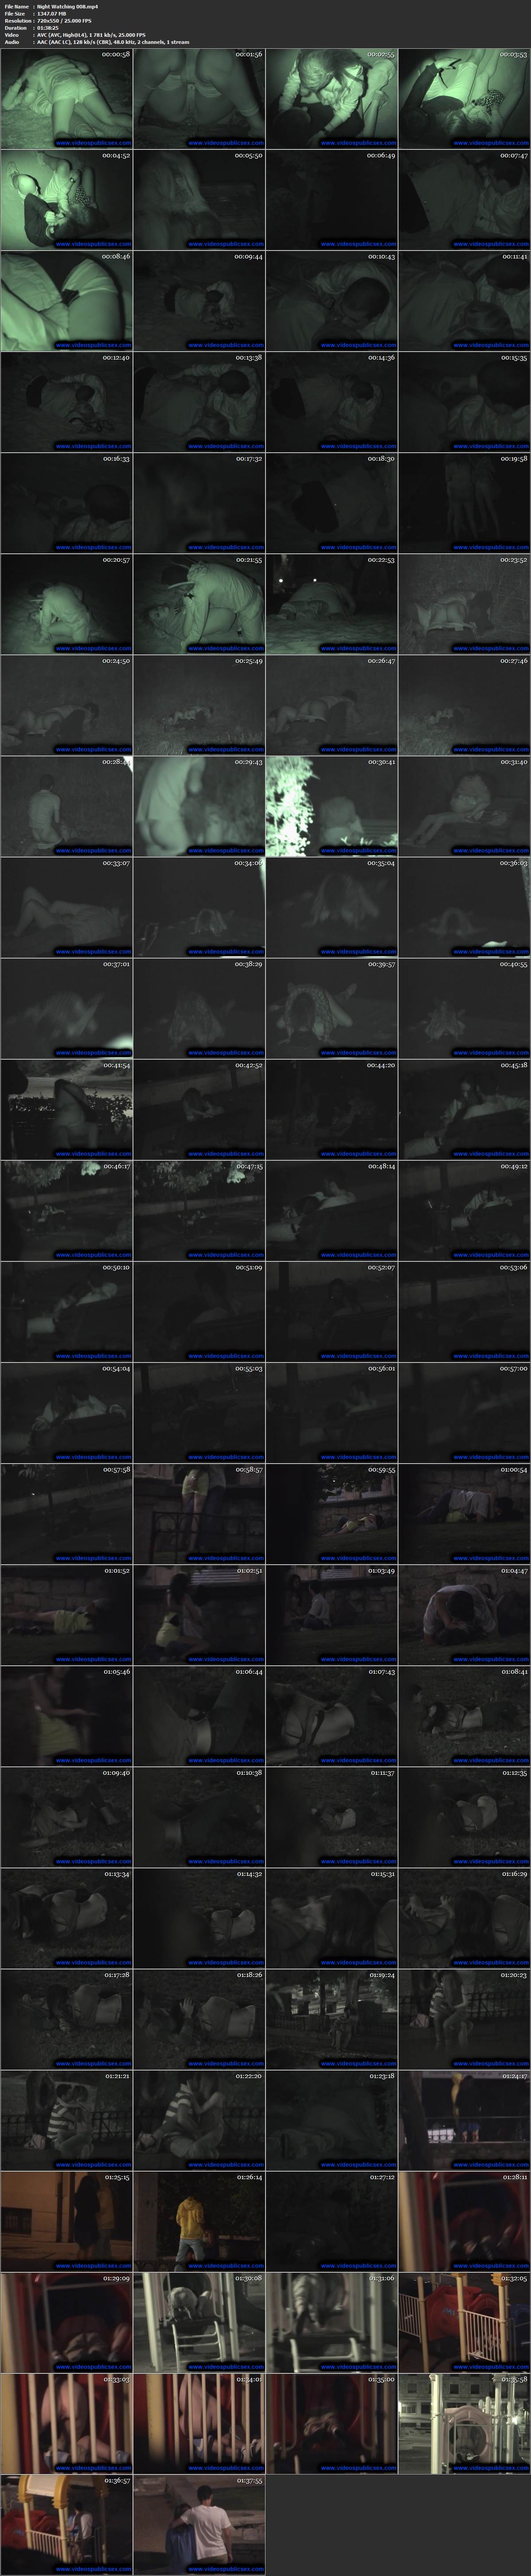 8 spy at night screenlit